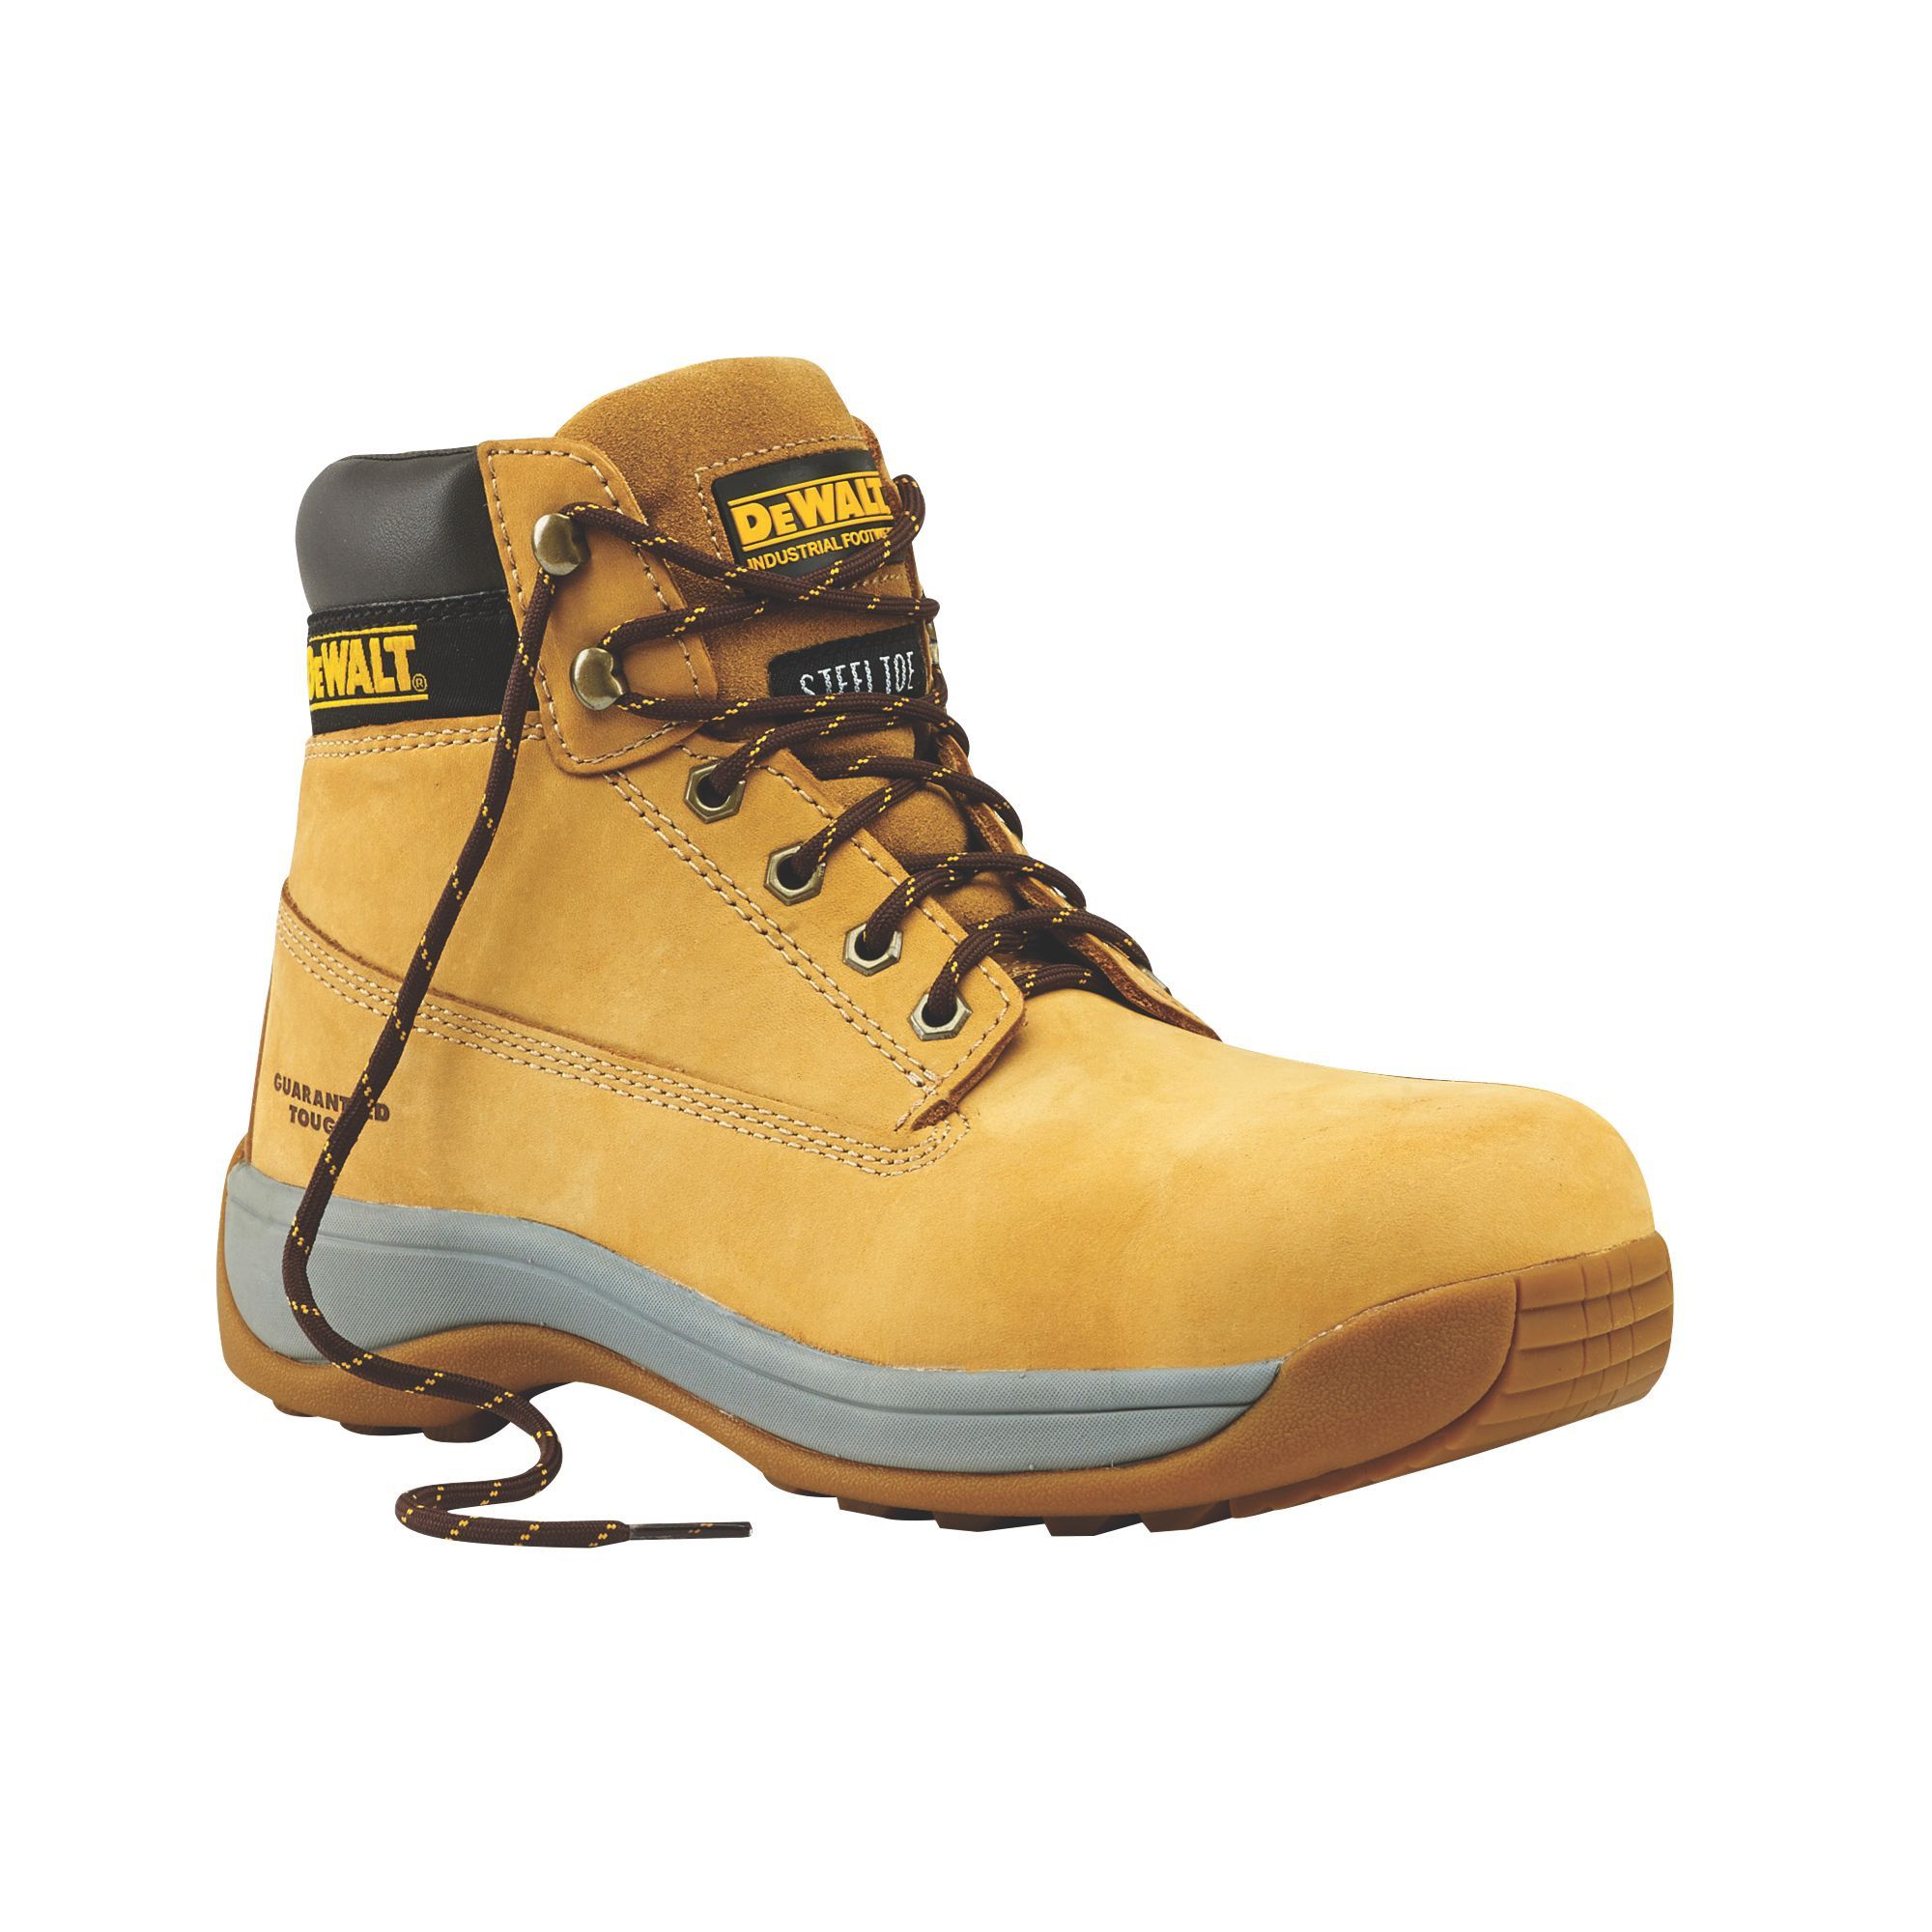 DeWalt Apprentice Men's Wheat Safety boots, Size 8